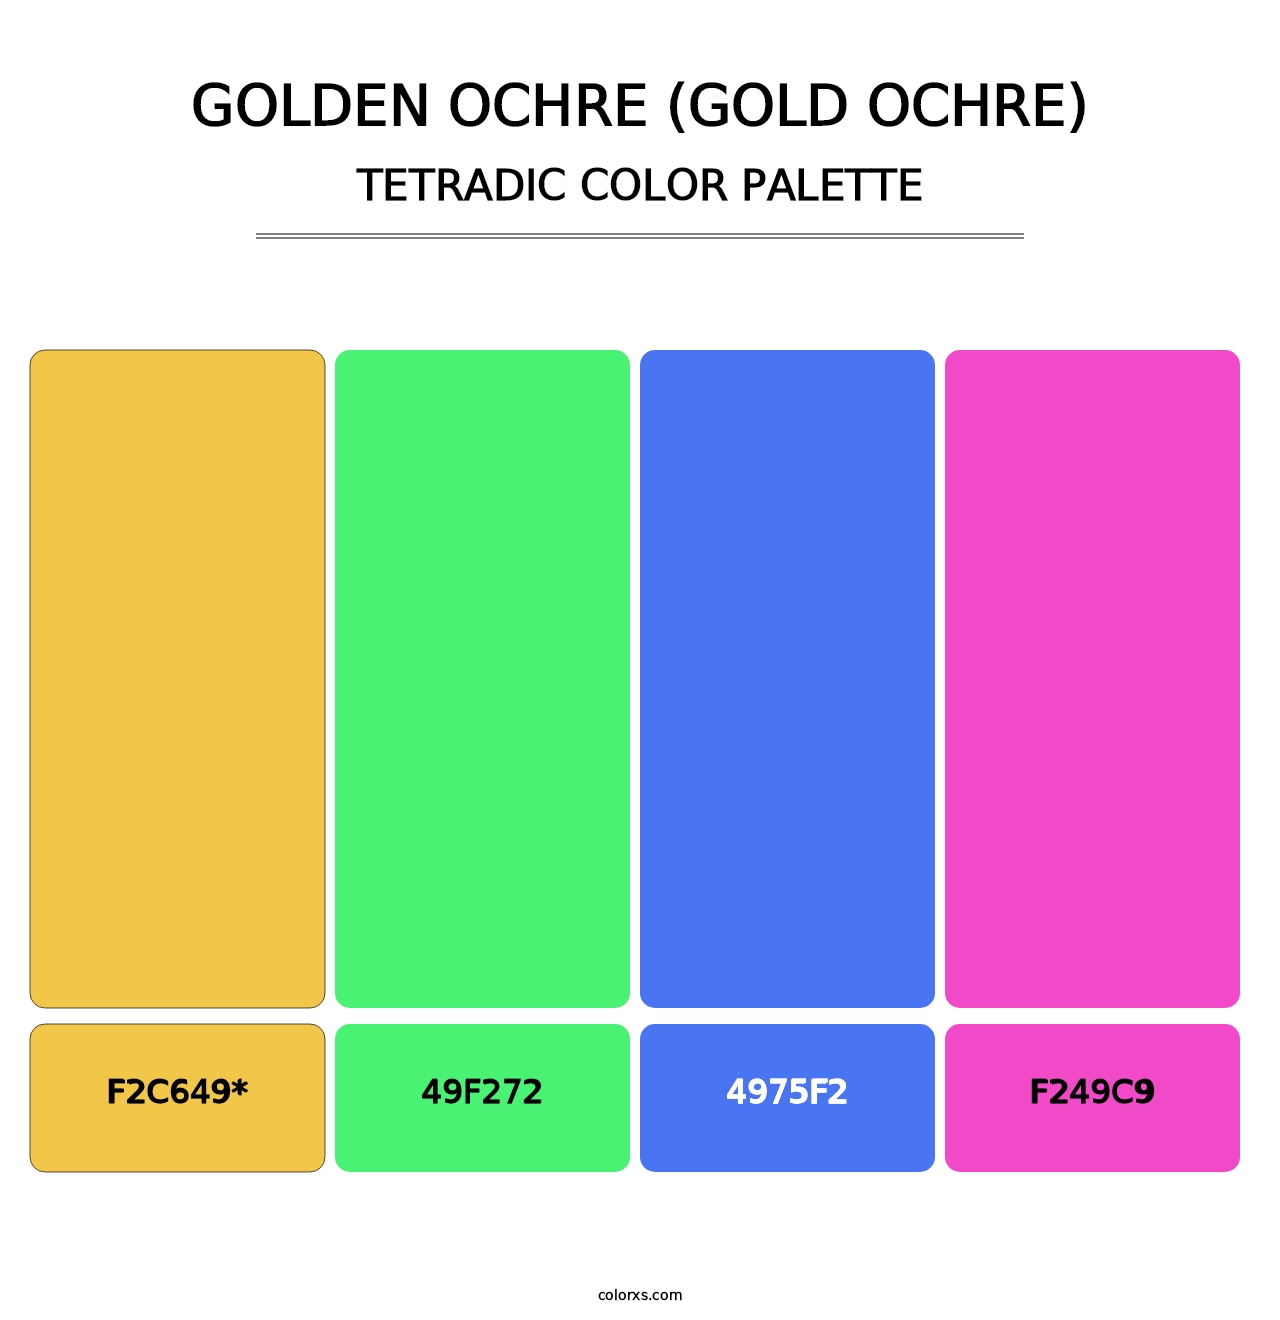 Golden Ochre (Gold Ochre) - Tetradic Color Palette